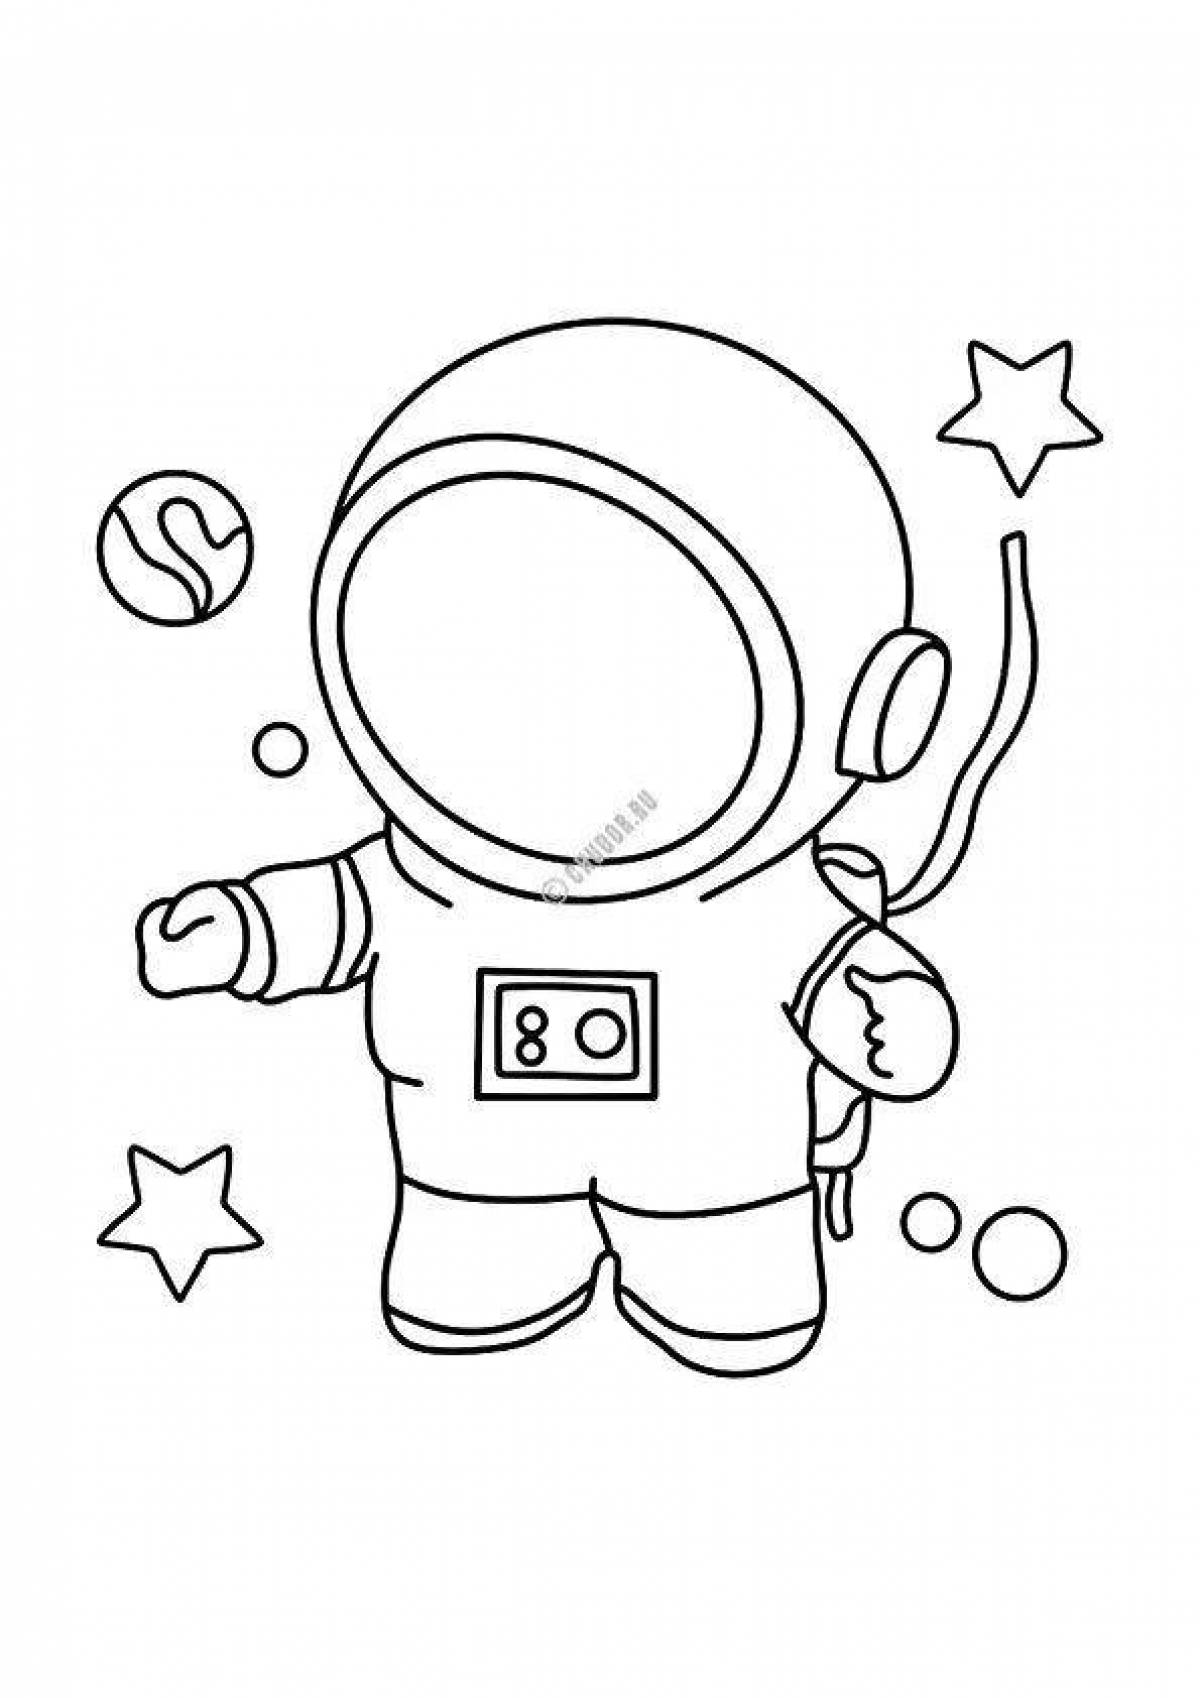 Скафандр раскраска. Космонавт раскраска. Космонавт раскраска для детей. Космонавт для раскрашивания для детей. Космонавт раскраска для малышей.